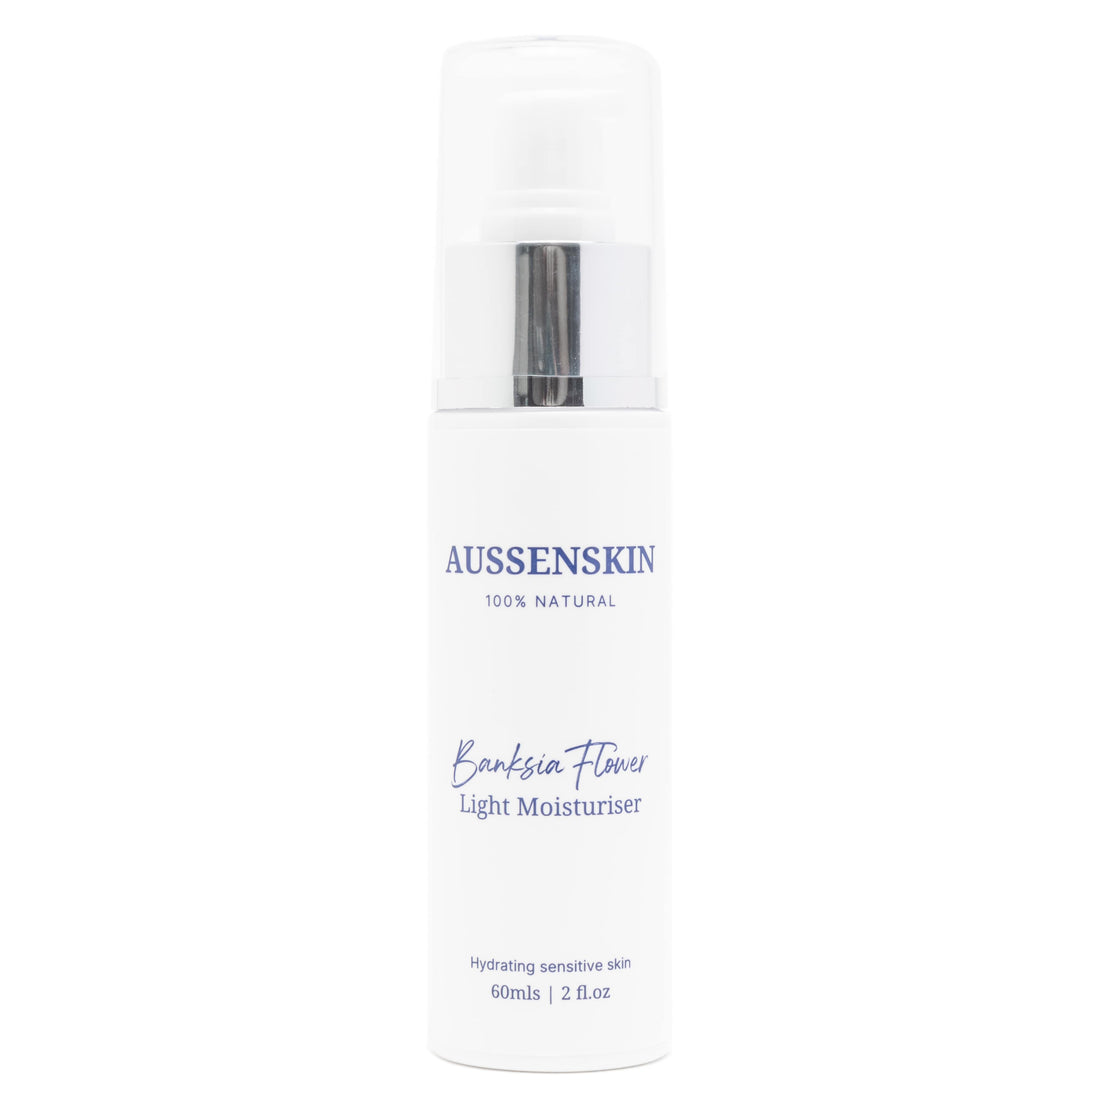 Aussenskin-safe-skincare-for-sensitive-skin-hydrating-moisturiser-for-sensitive-skin